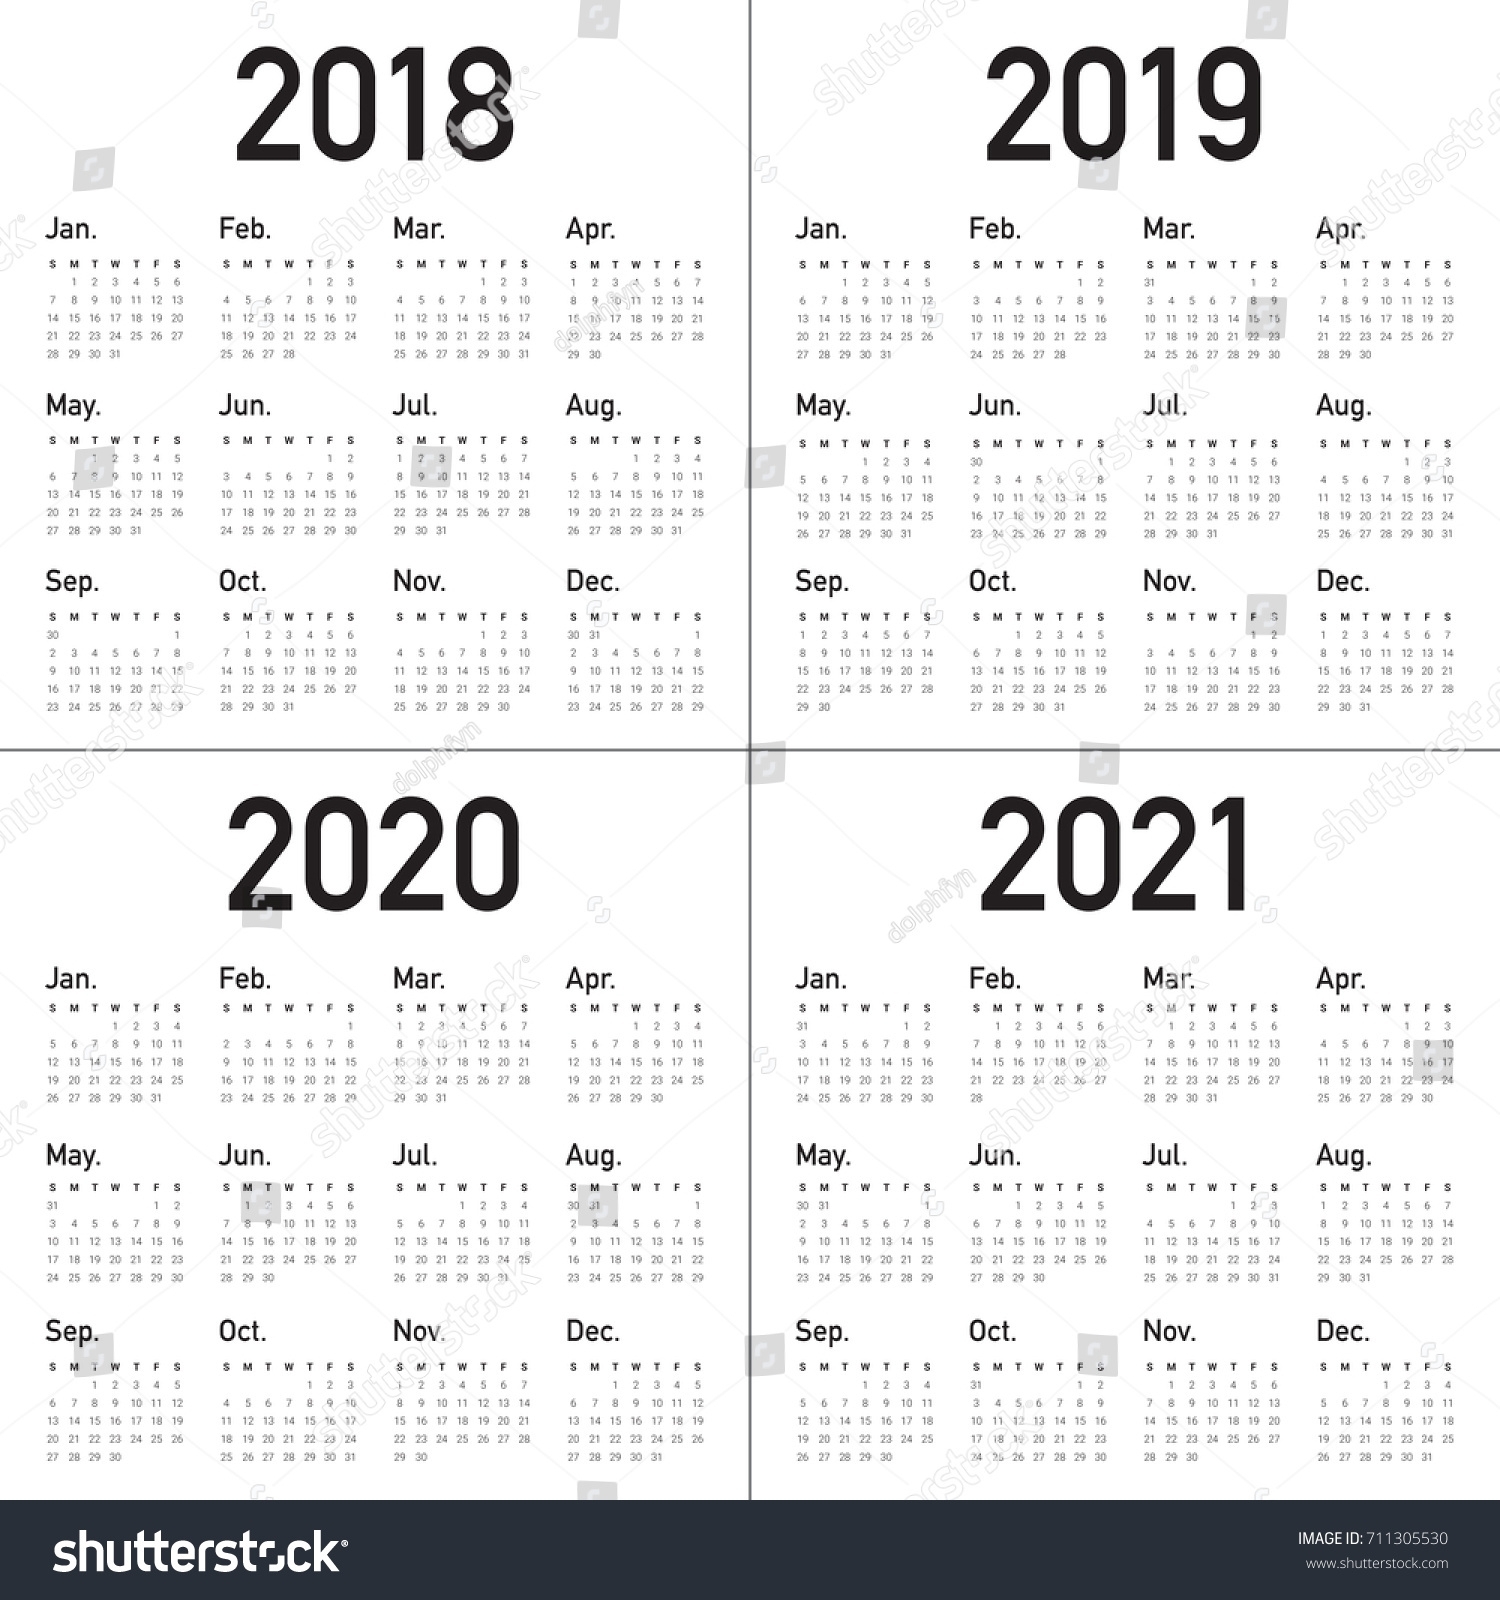 Printable 3 Year Calendar 2019 To 2021 | Printable Calendar 2019 regarding Three Year Calendar Printable Free